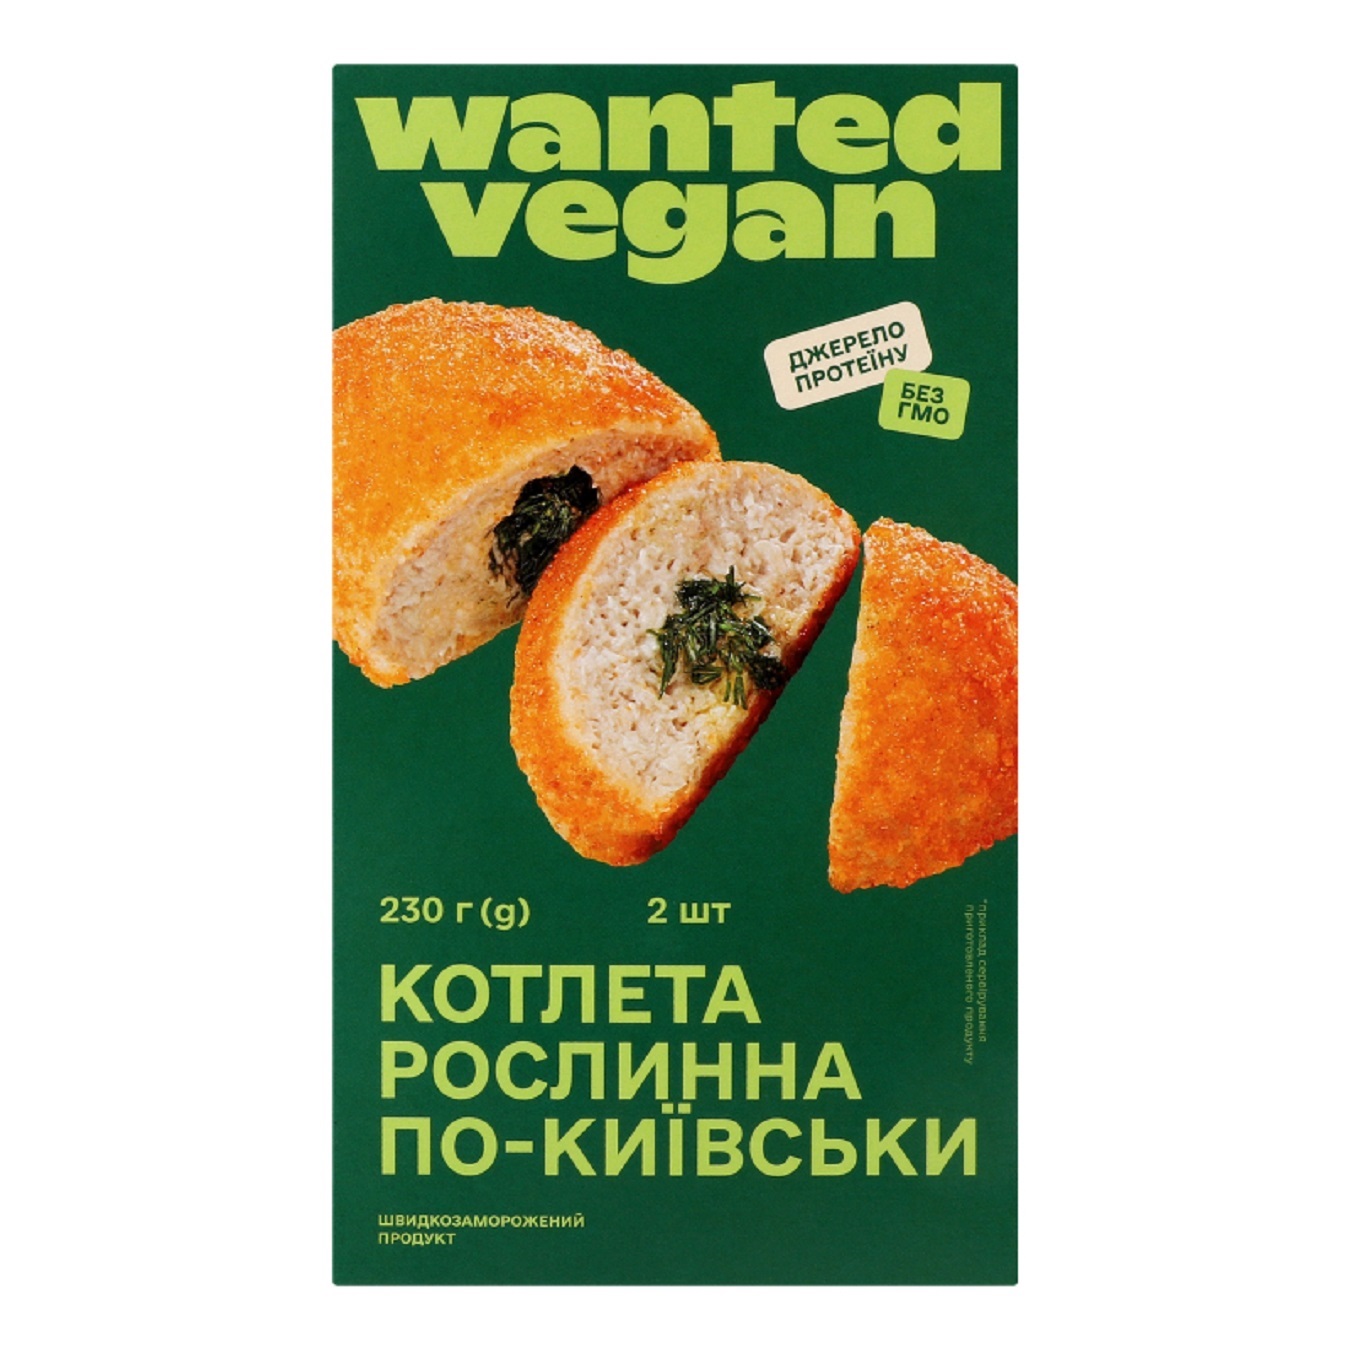 Wanted Vegan Kiev-style cutlet 230g